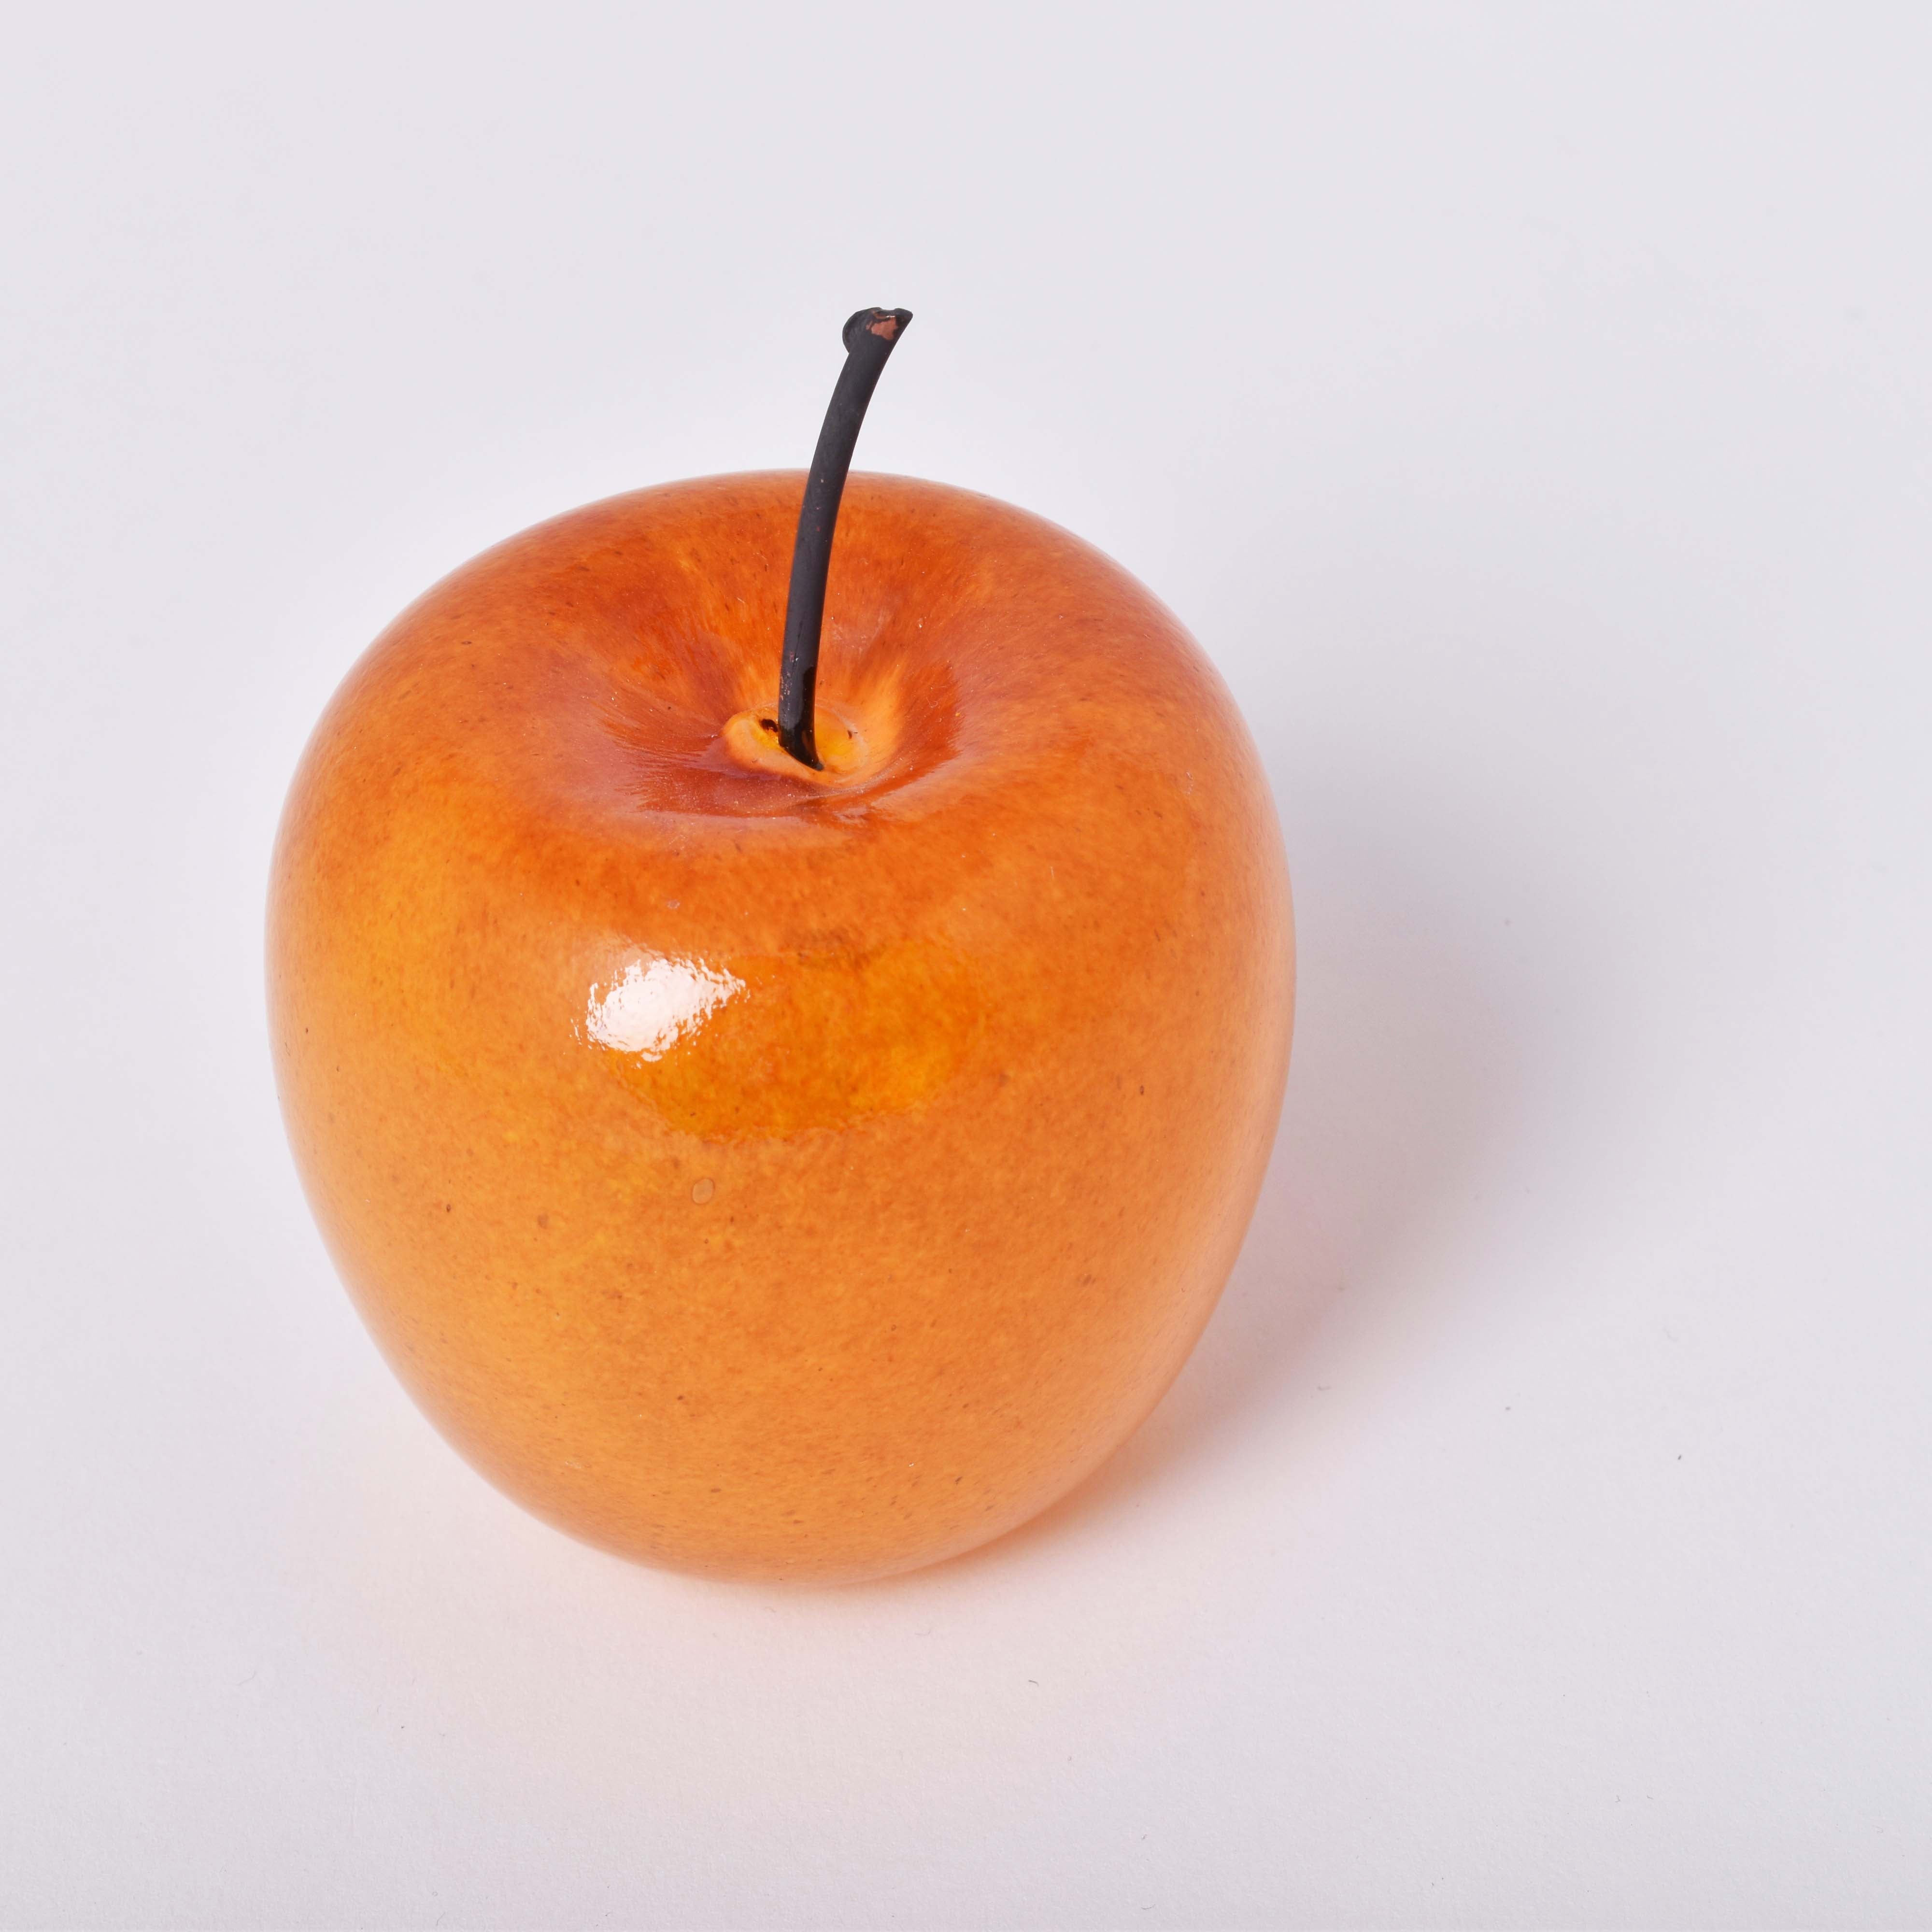 Orange äpple i glas med skaft i koppar av Gunilla Kihlgren